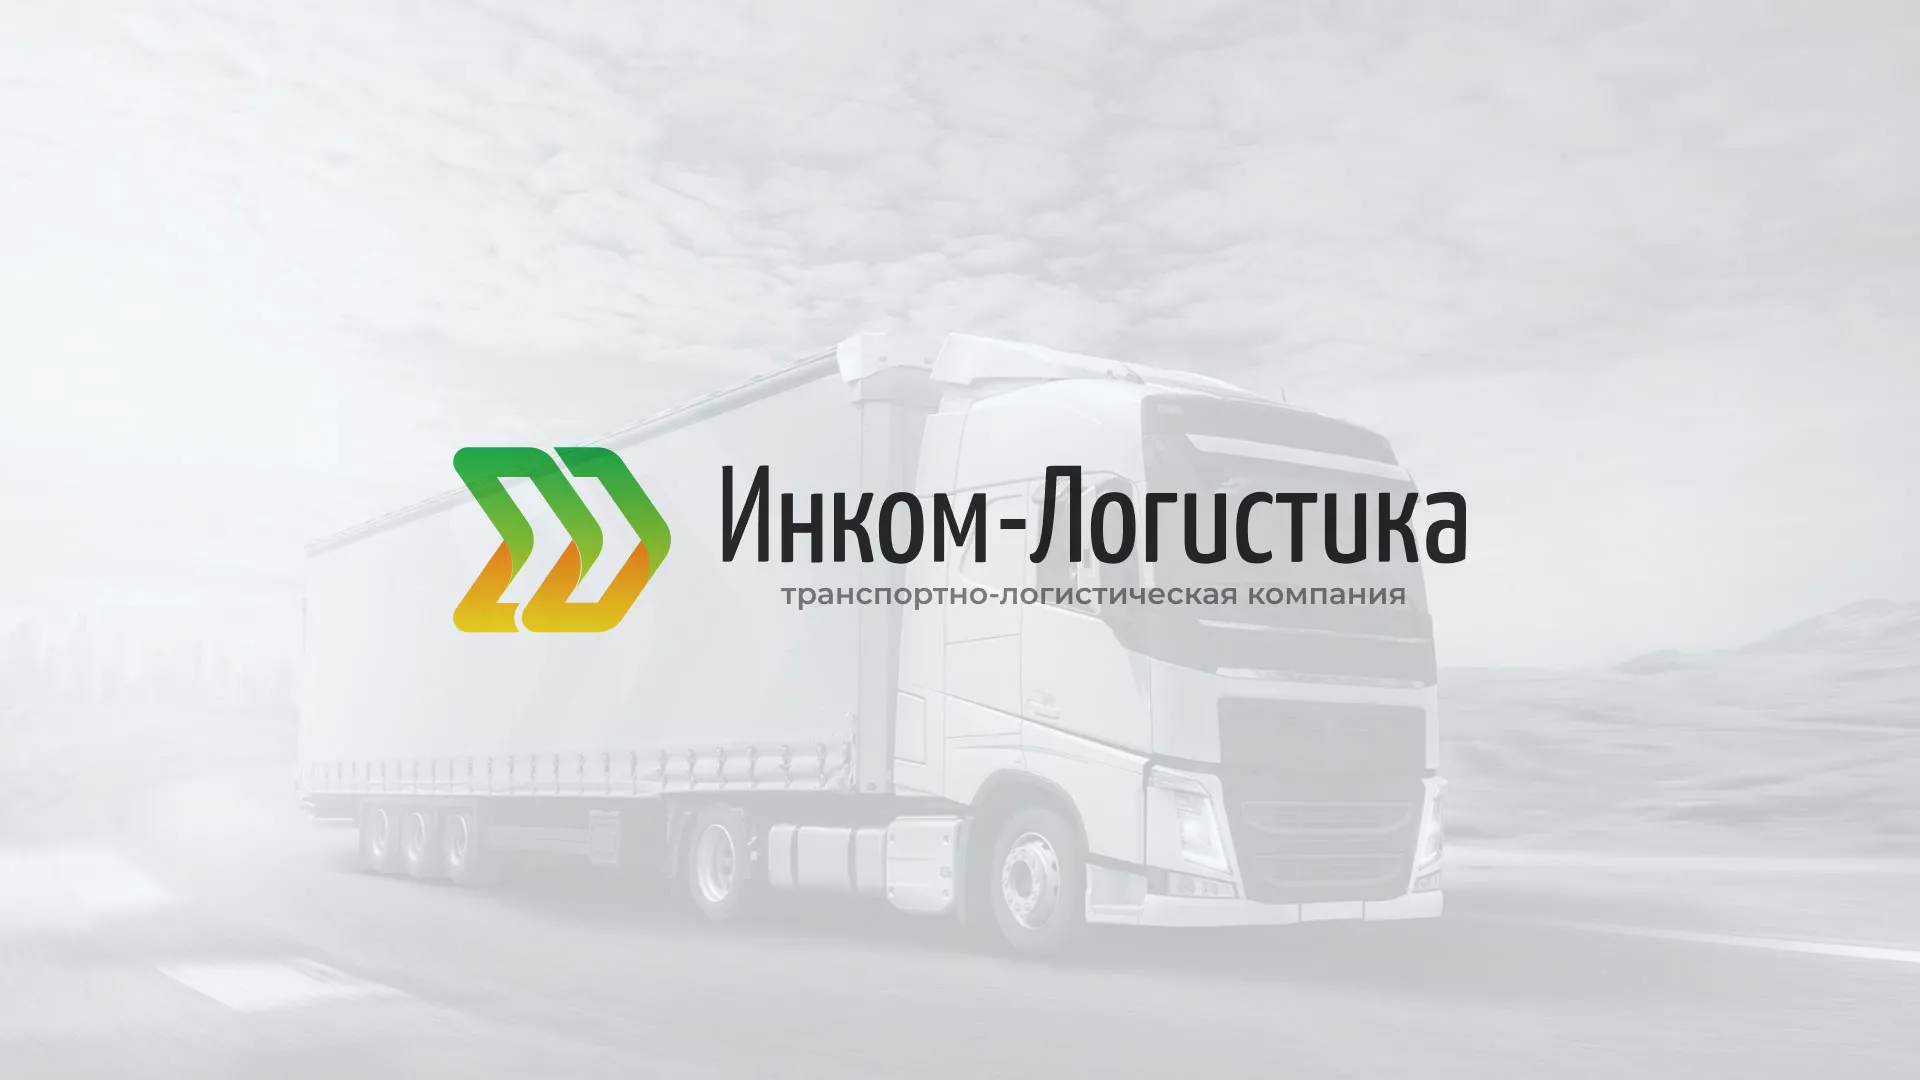 Разработка логотипа и сайта компании «Инком-Логистика» в Урюпинске